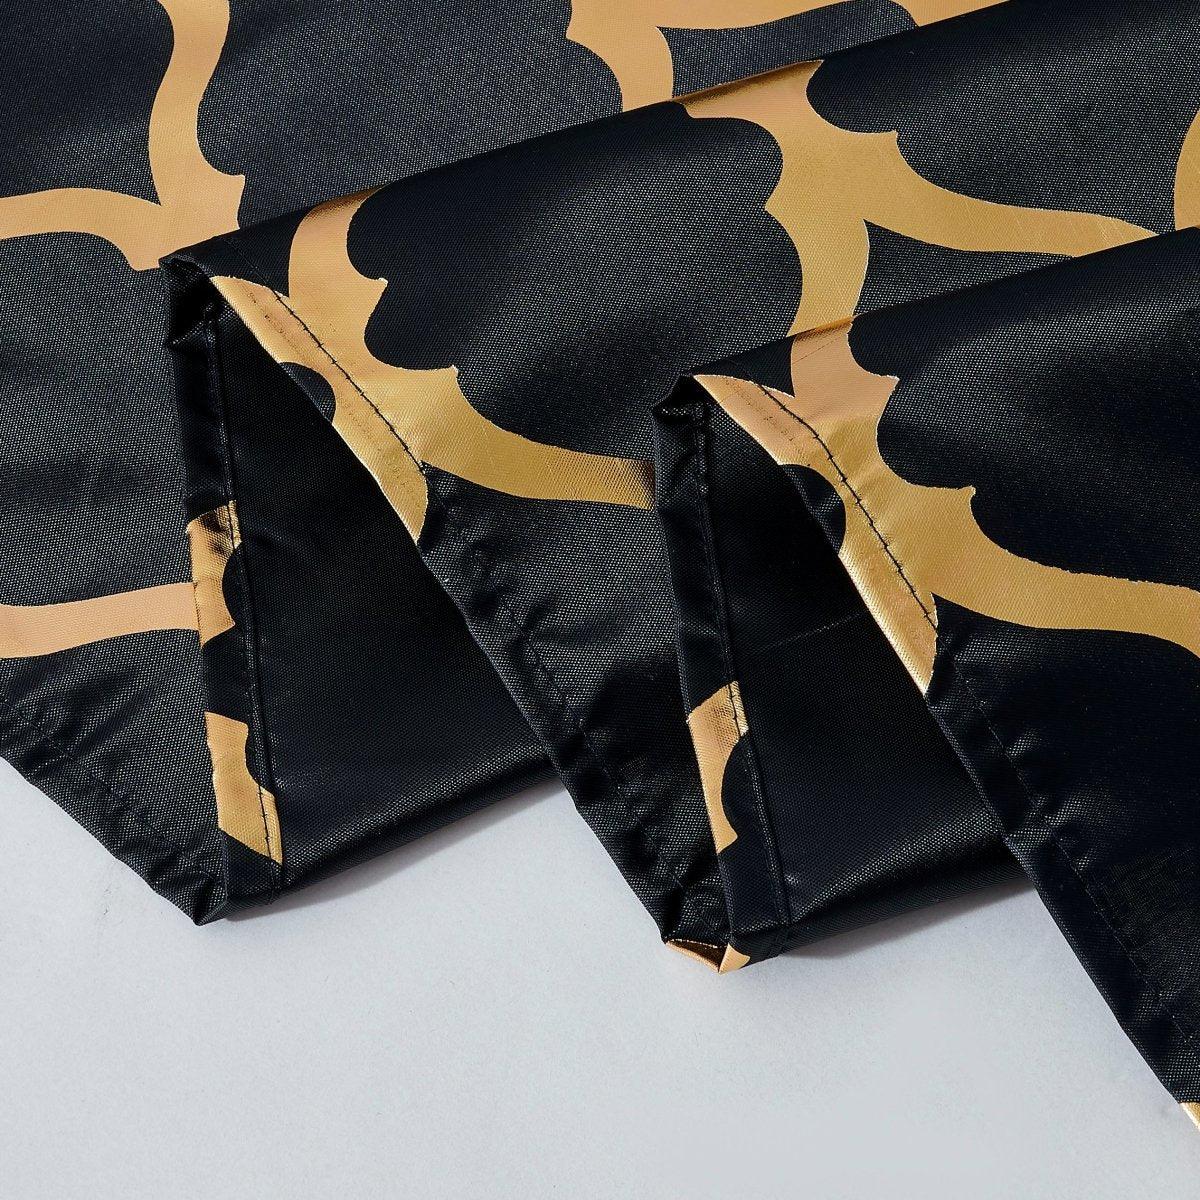 14pc Hooks with Rug Polyester Shower Curtain Set - Spirit Linen | Black